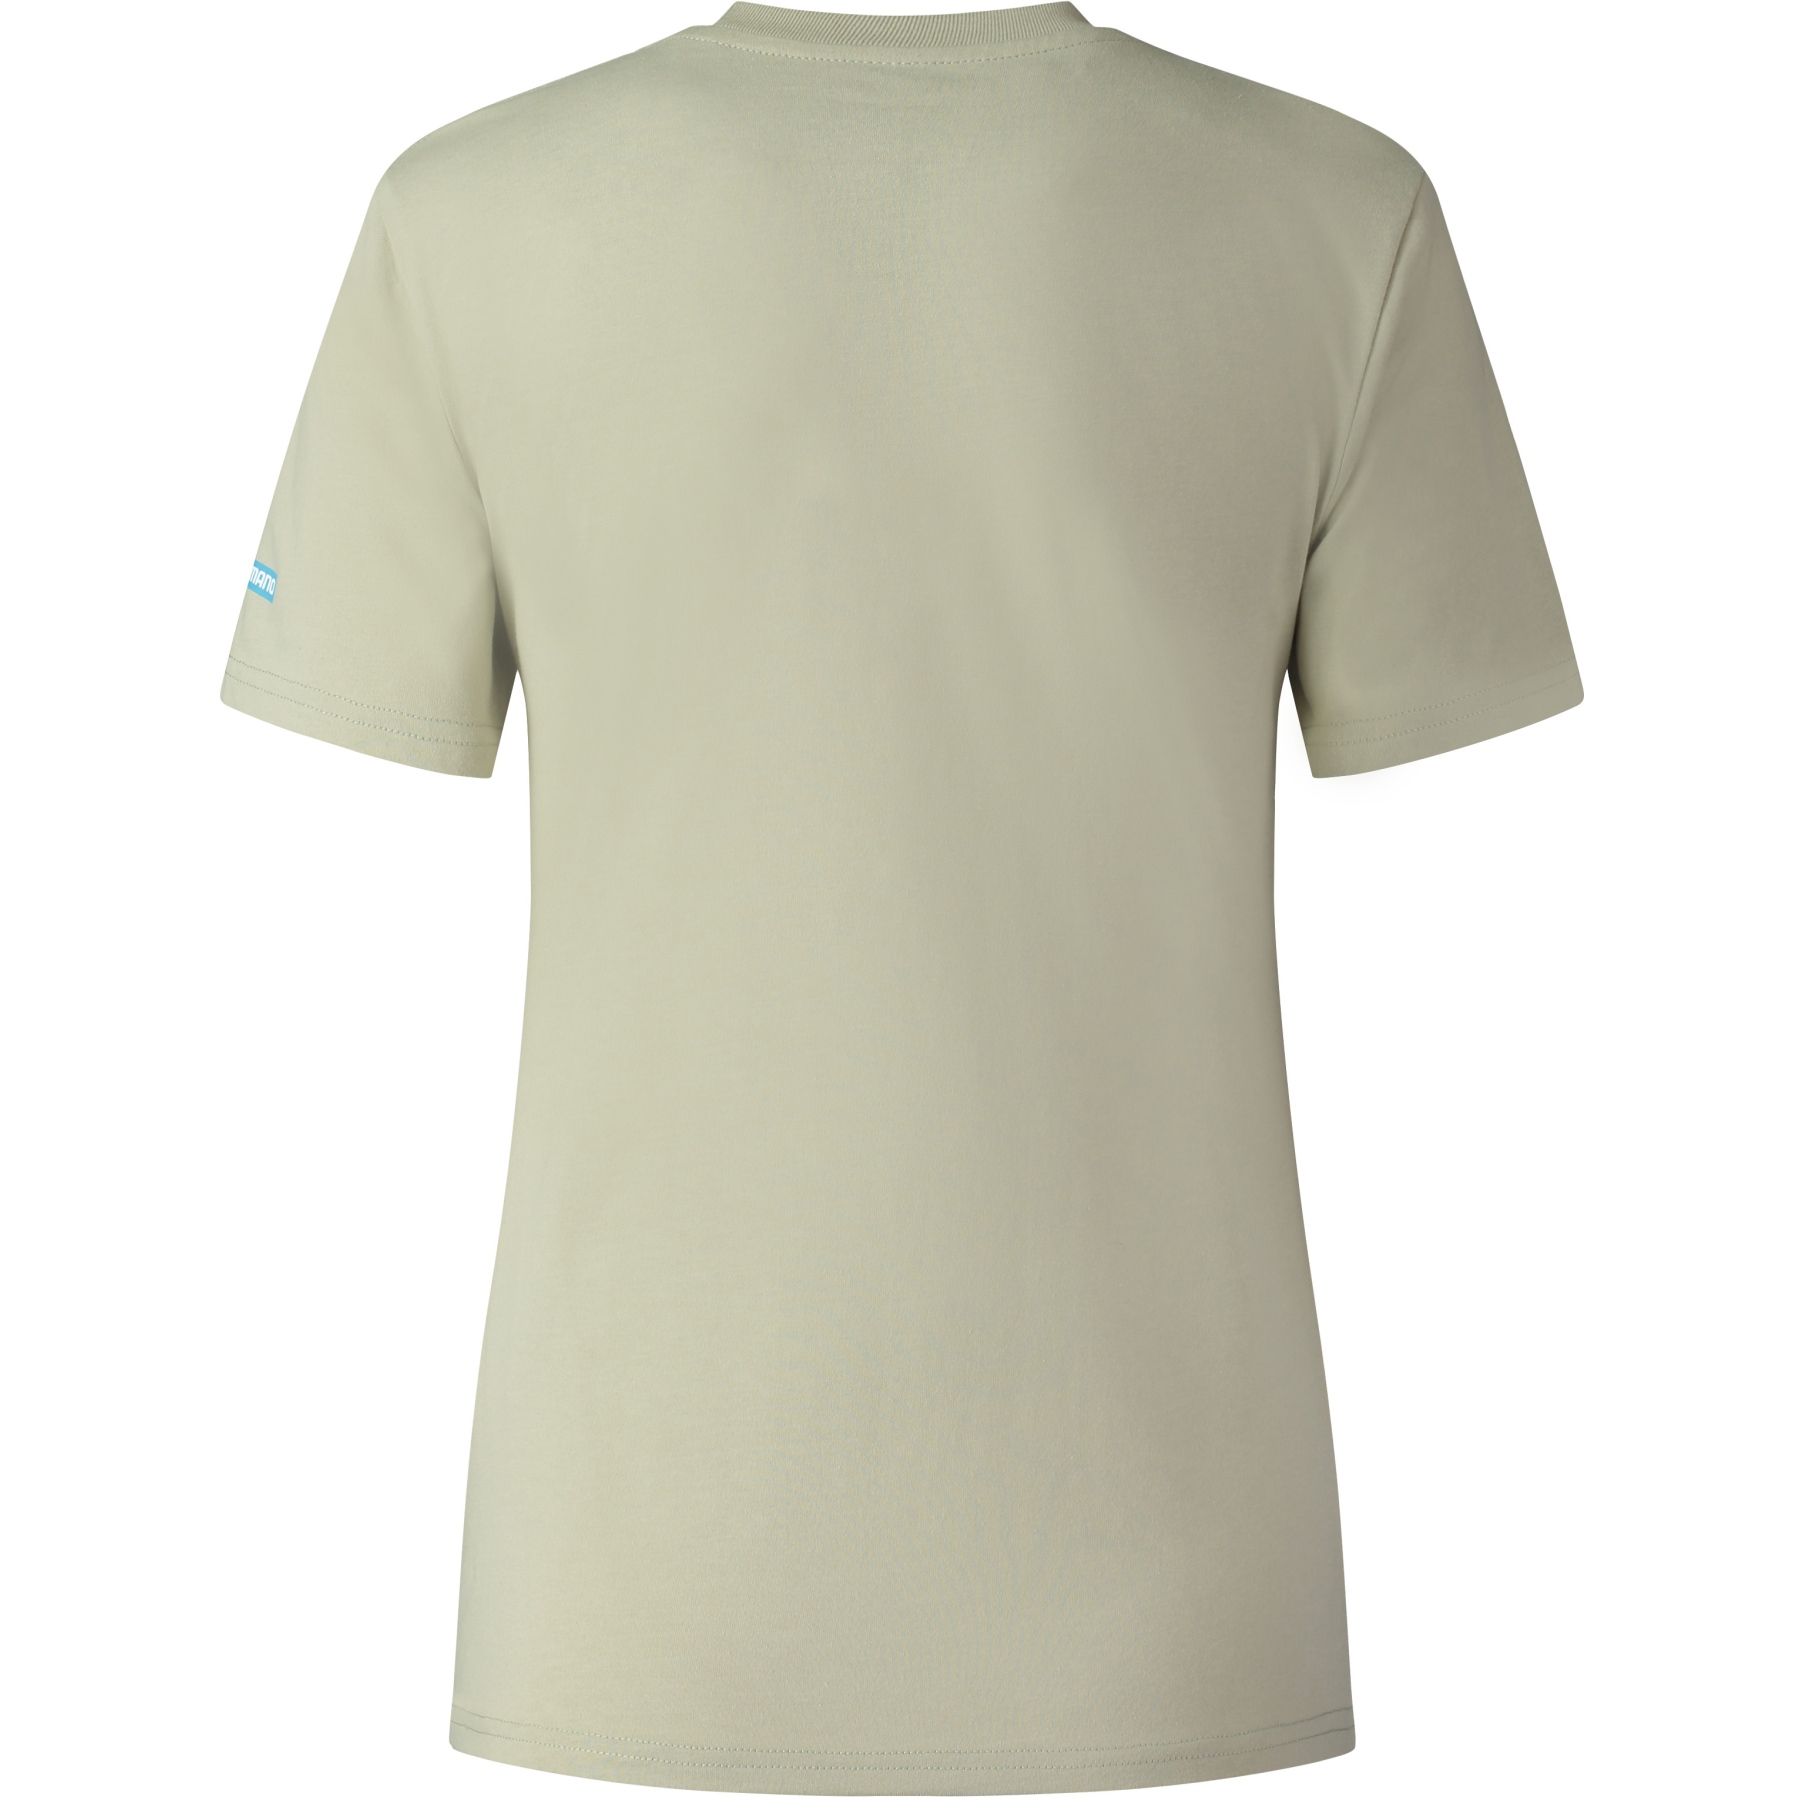 Shimano T-Shirt Damen - olive gravel